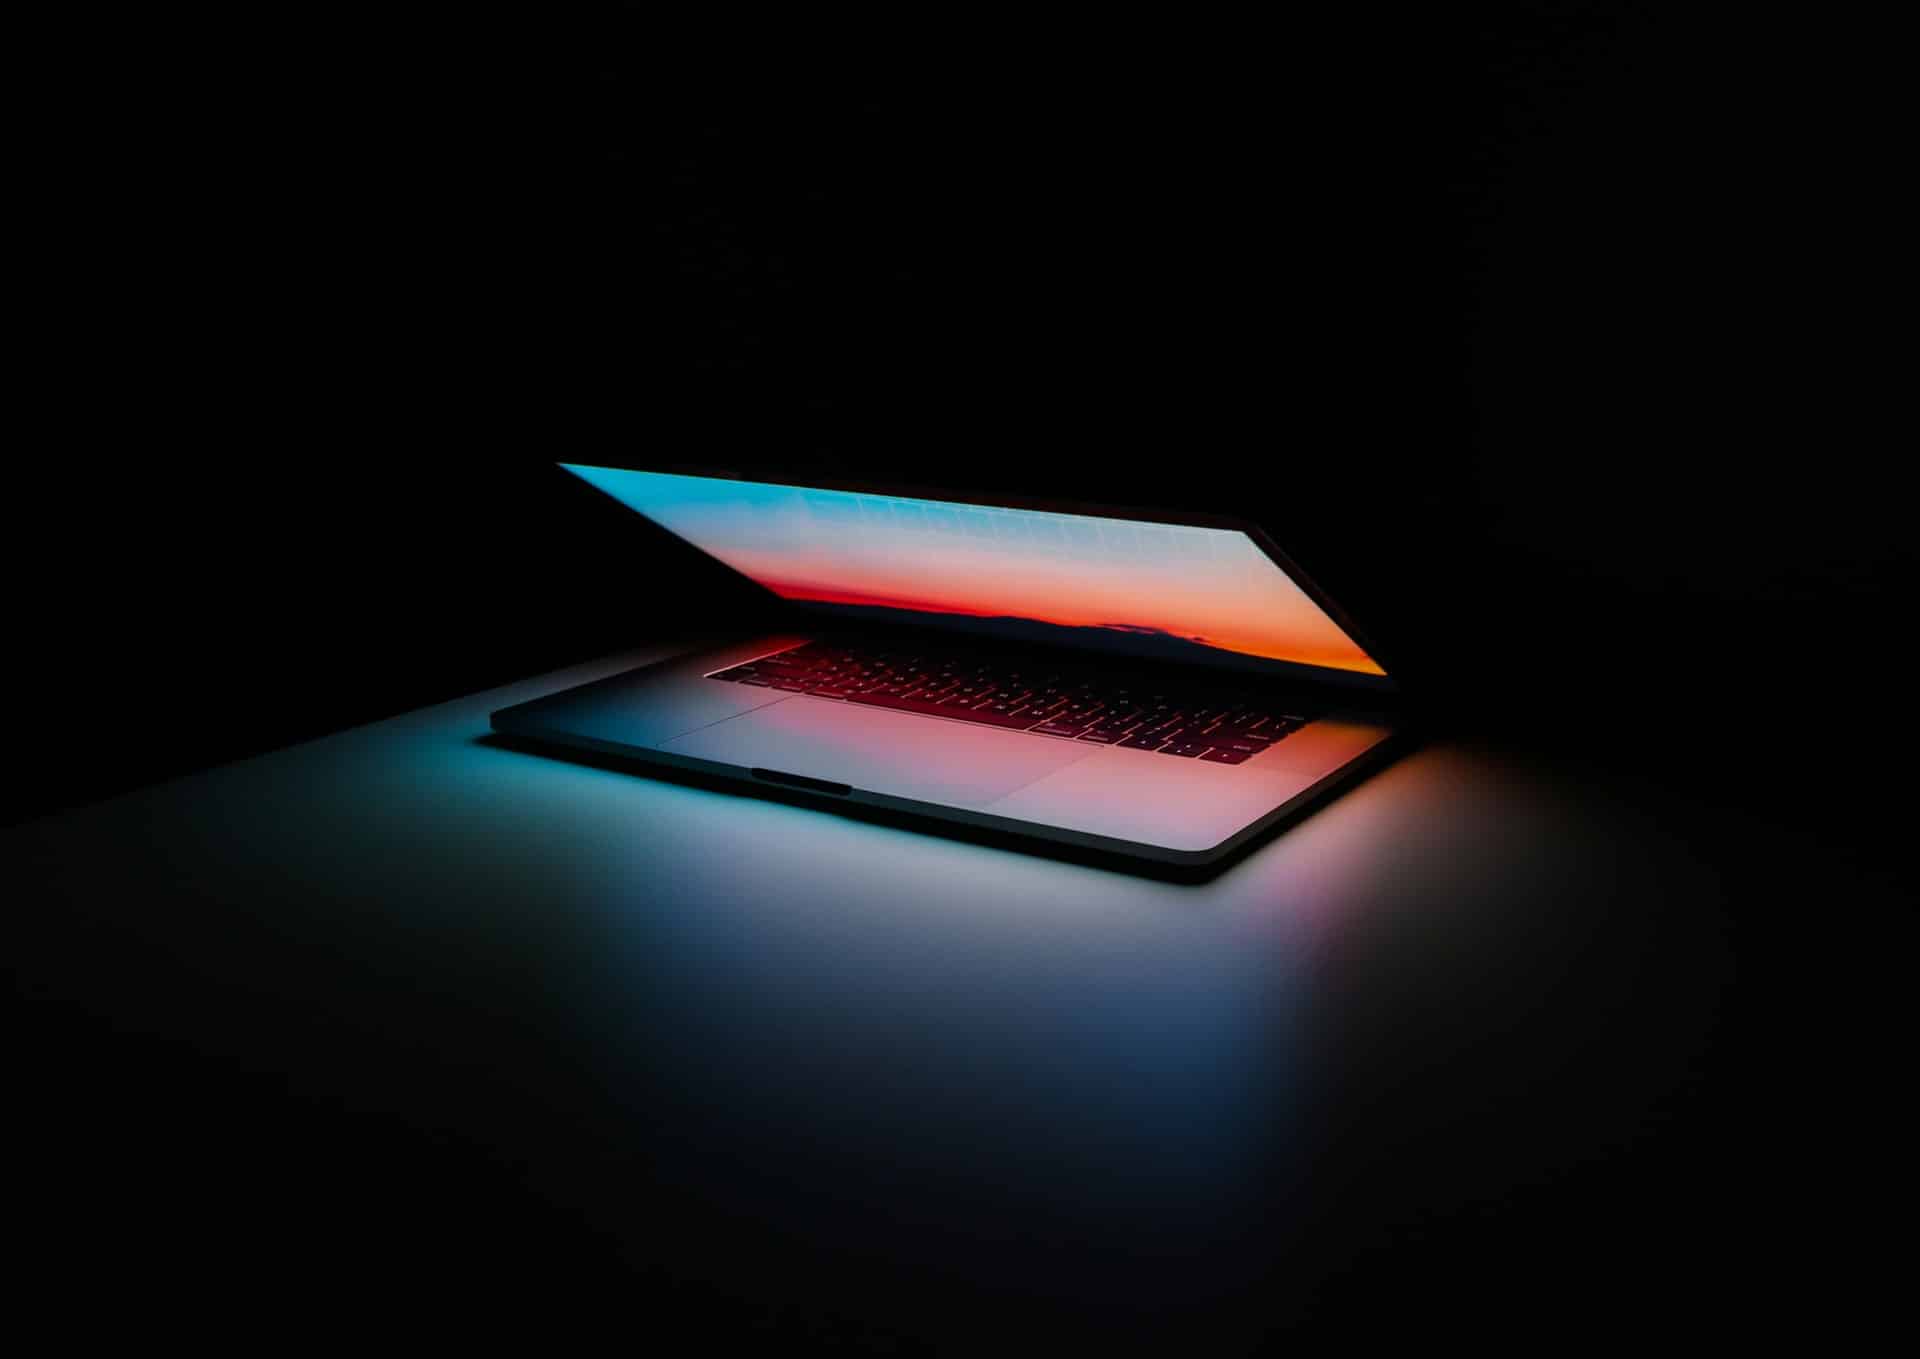 Macbook closing in a dark room.